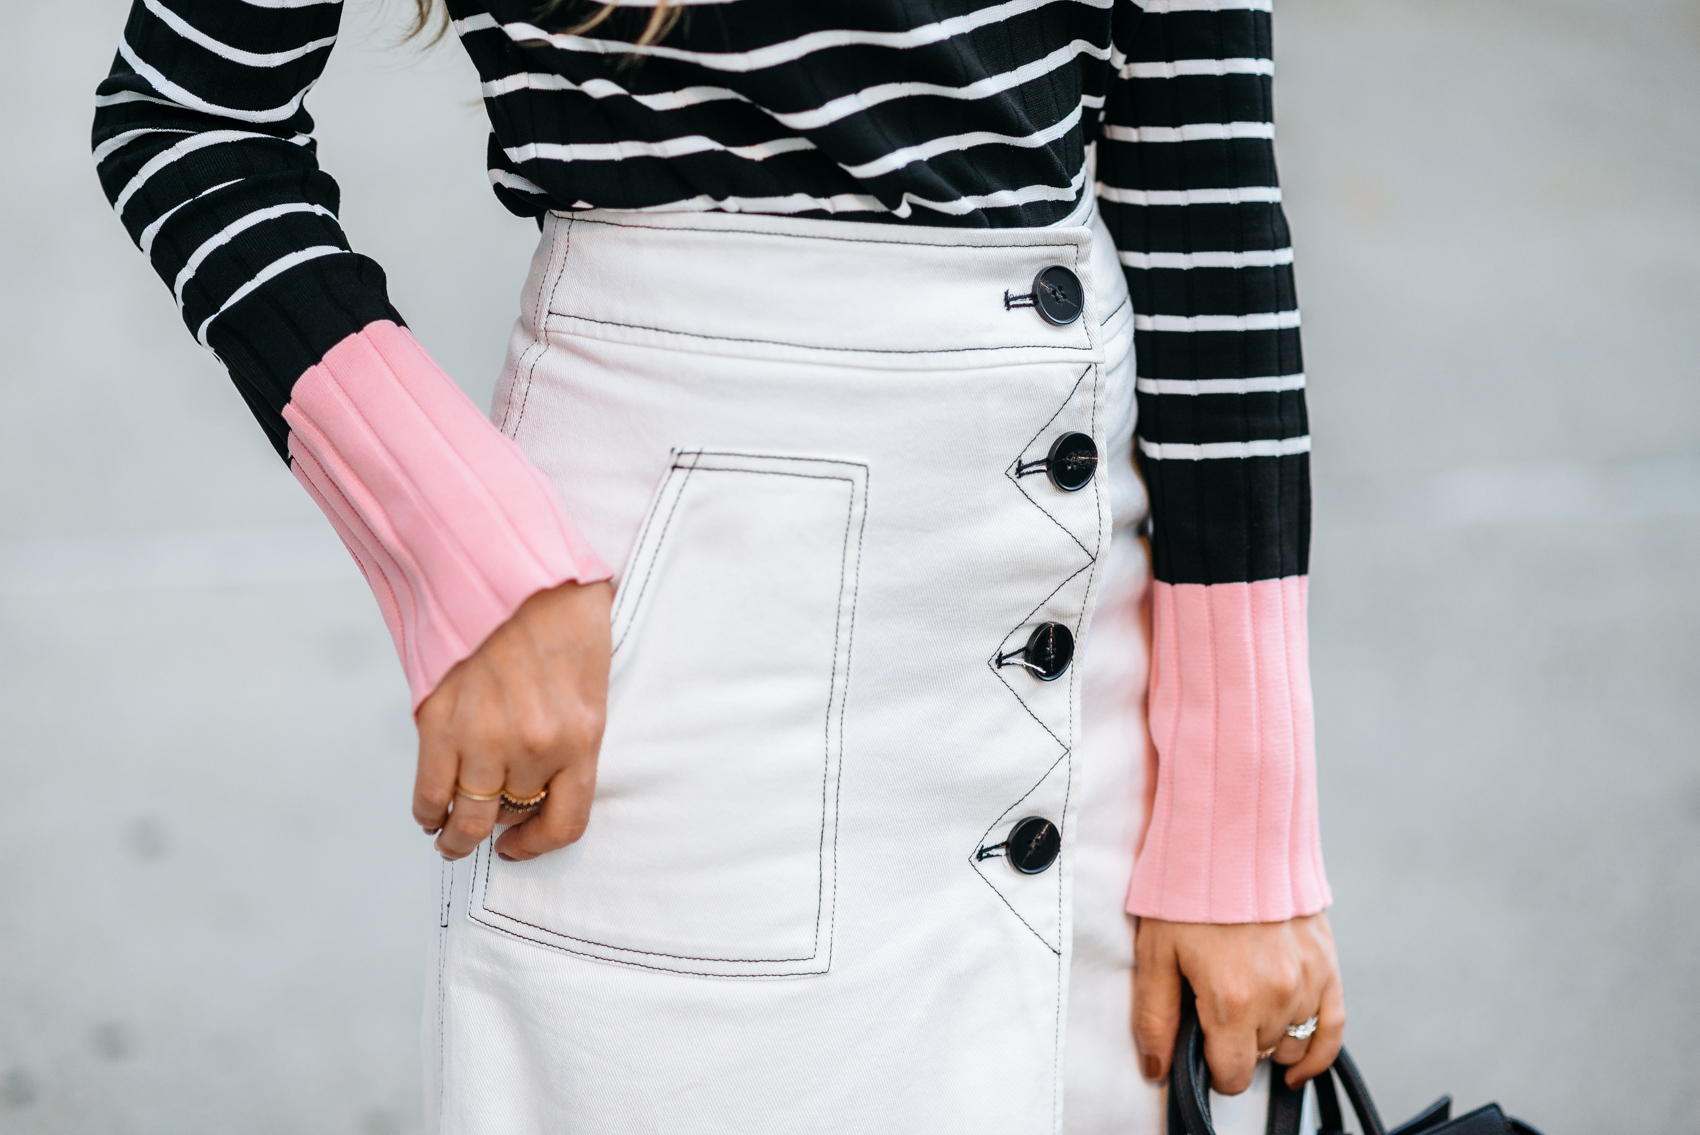 High waist button front skirt outfit idea by blogger Maristella